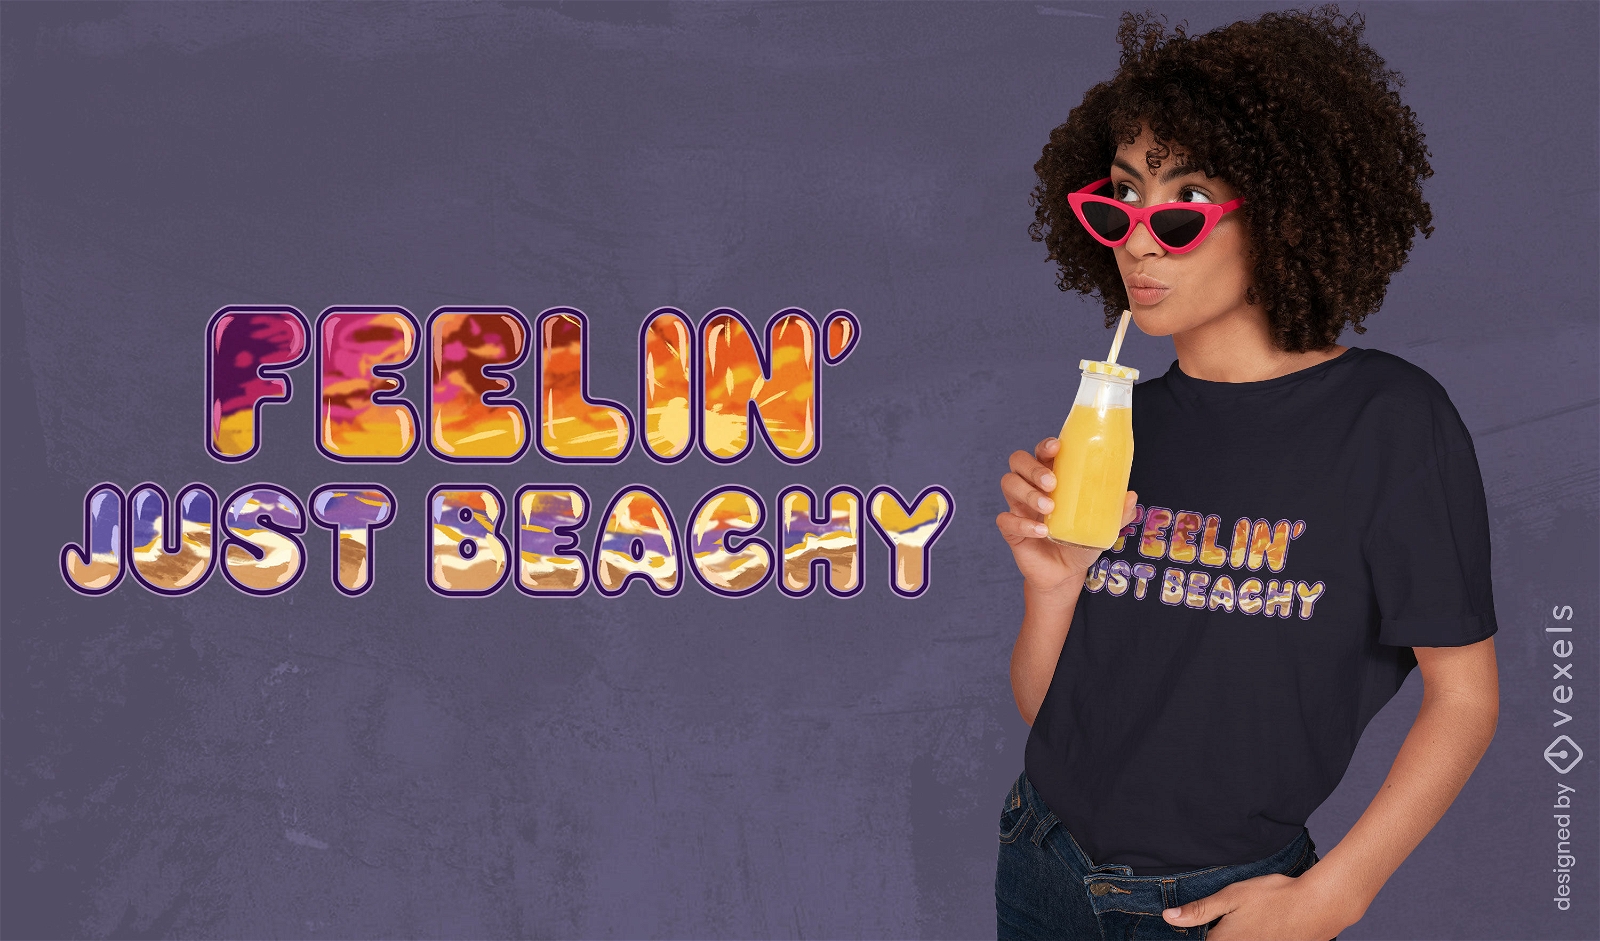 Beachy quote t-shirt design